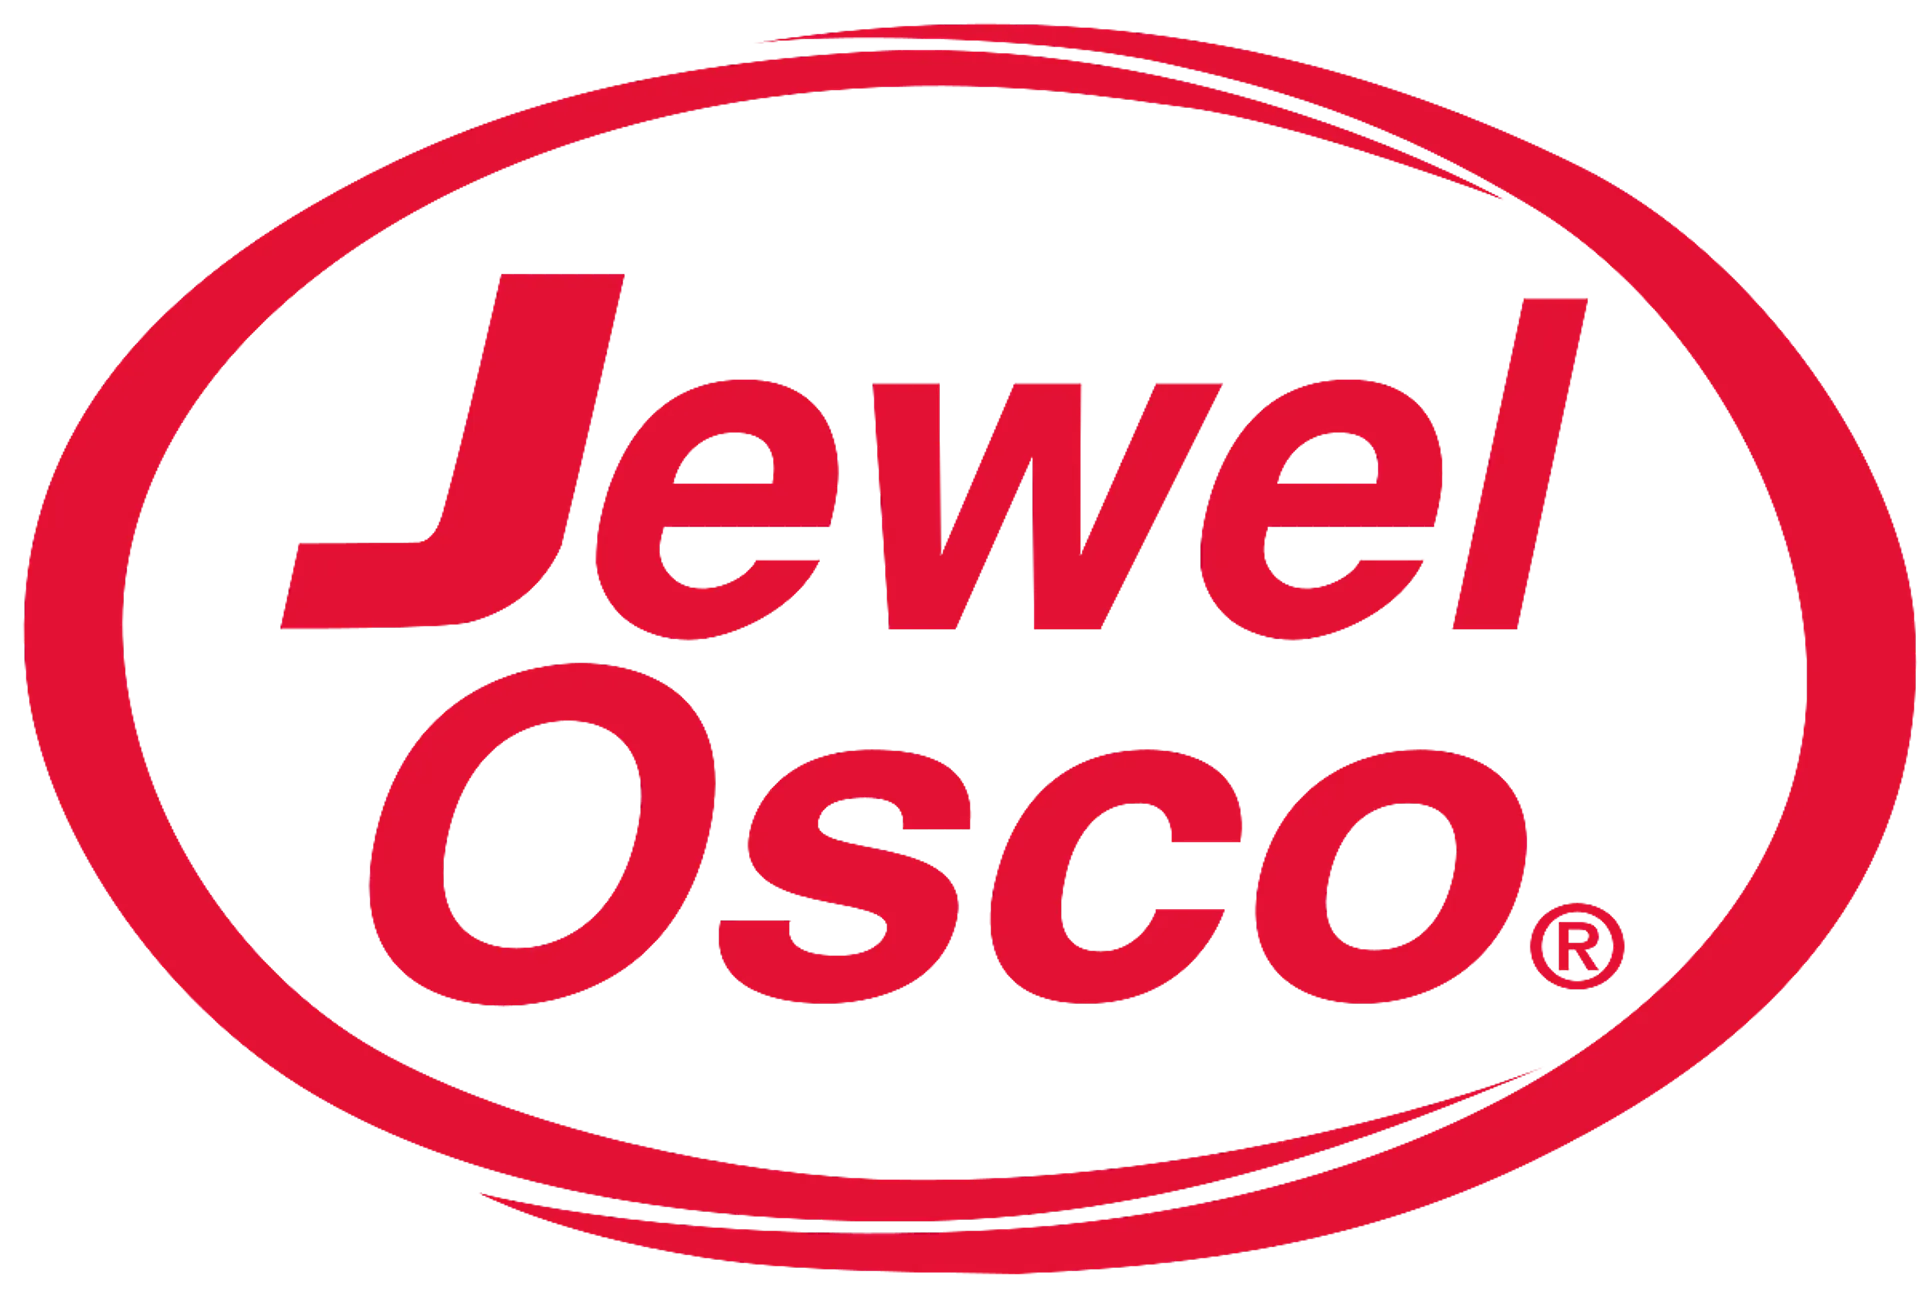 JEWEL OSCO logo current weekly ad